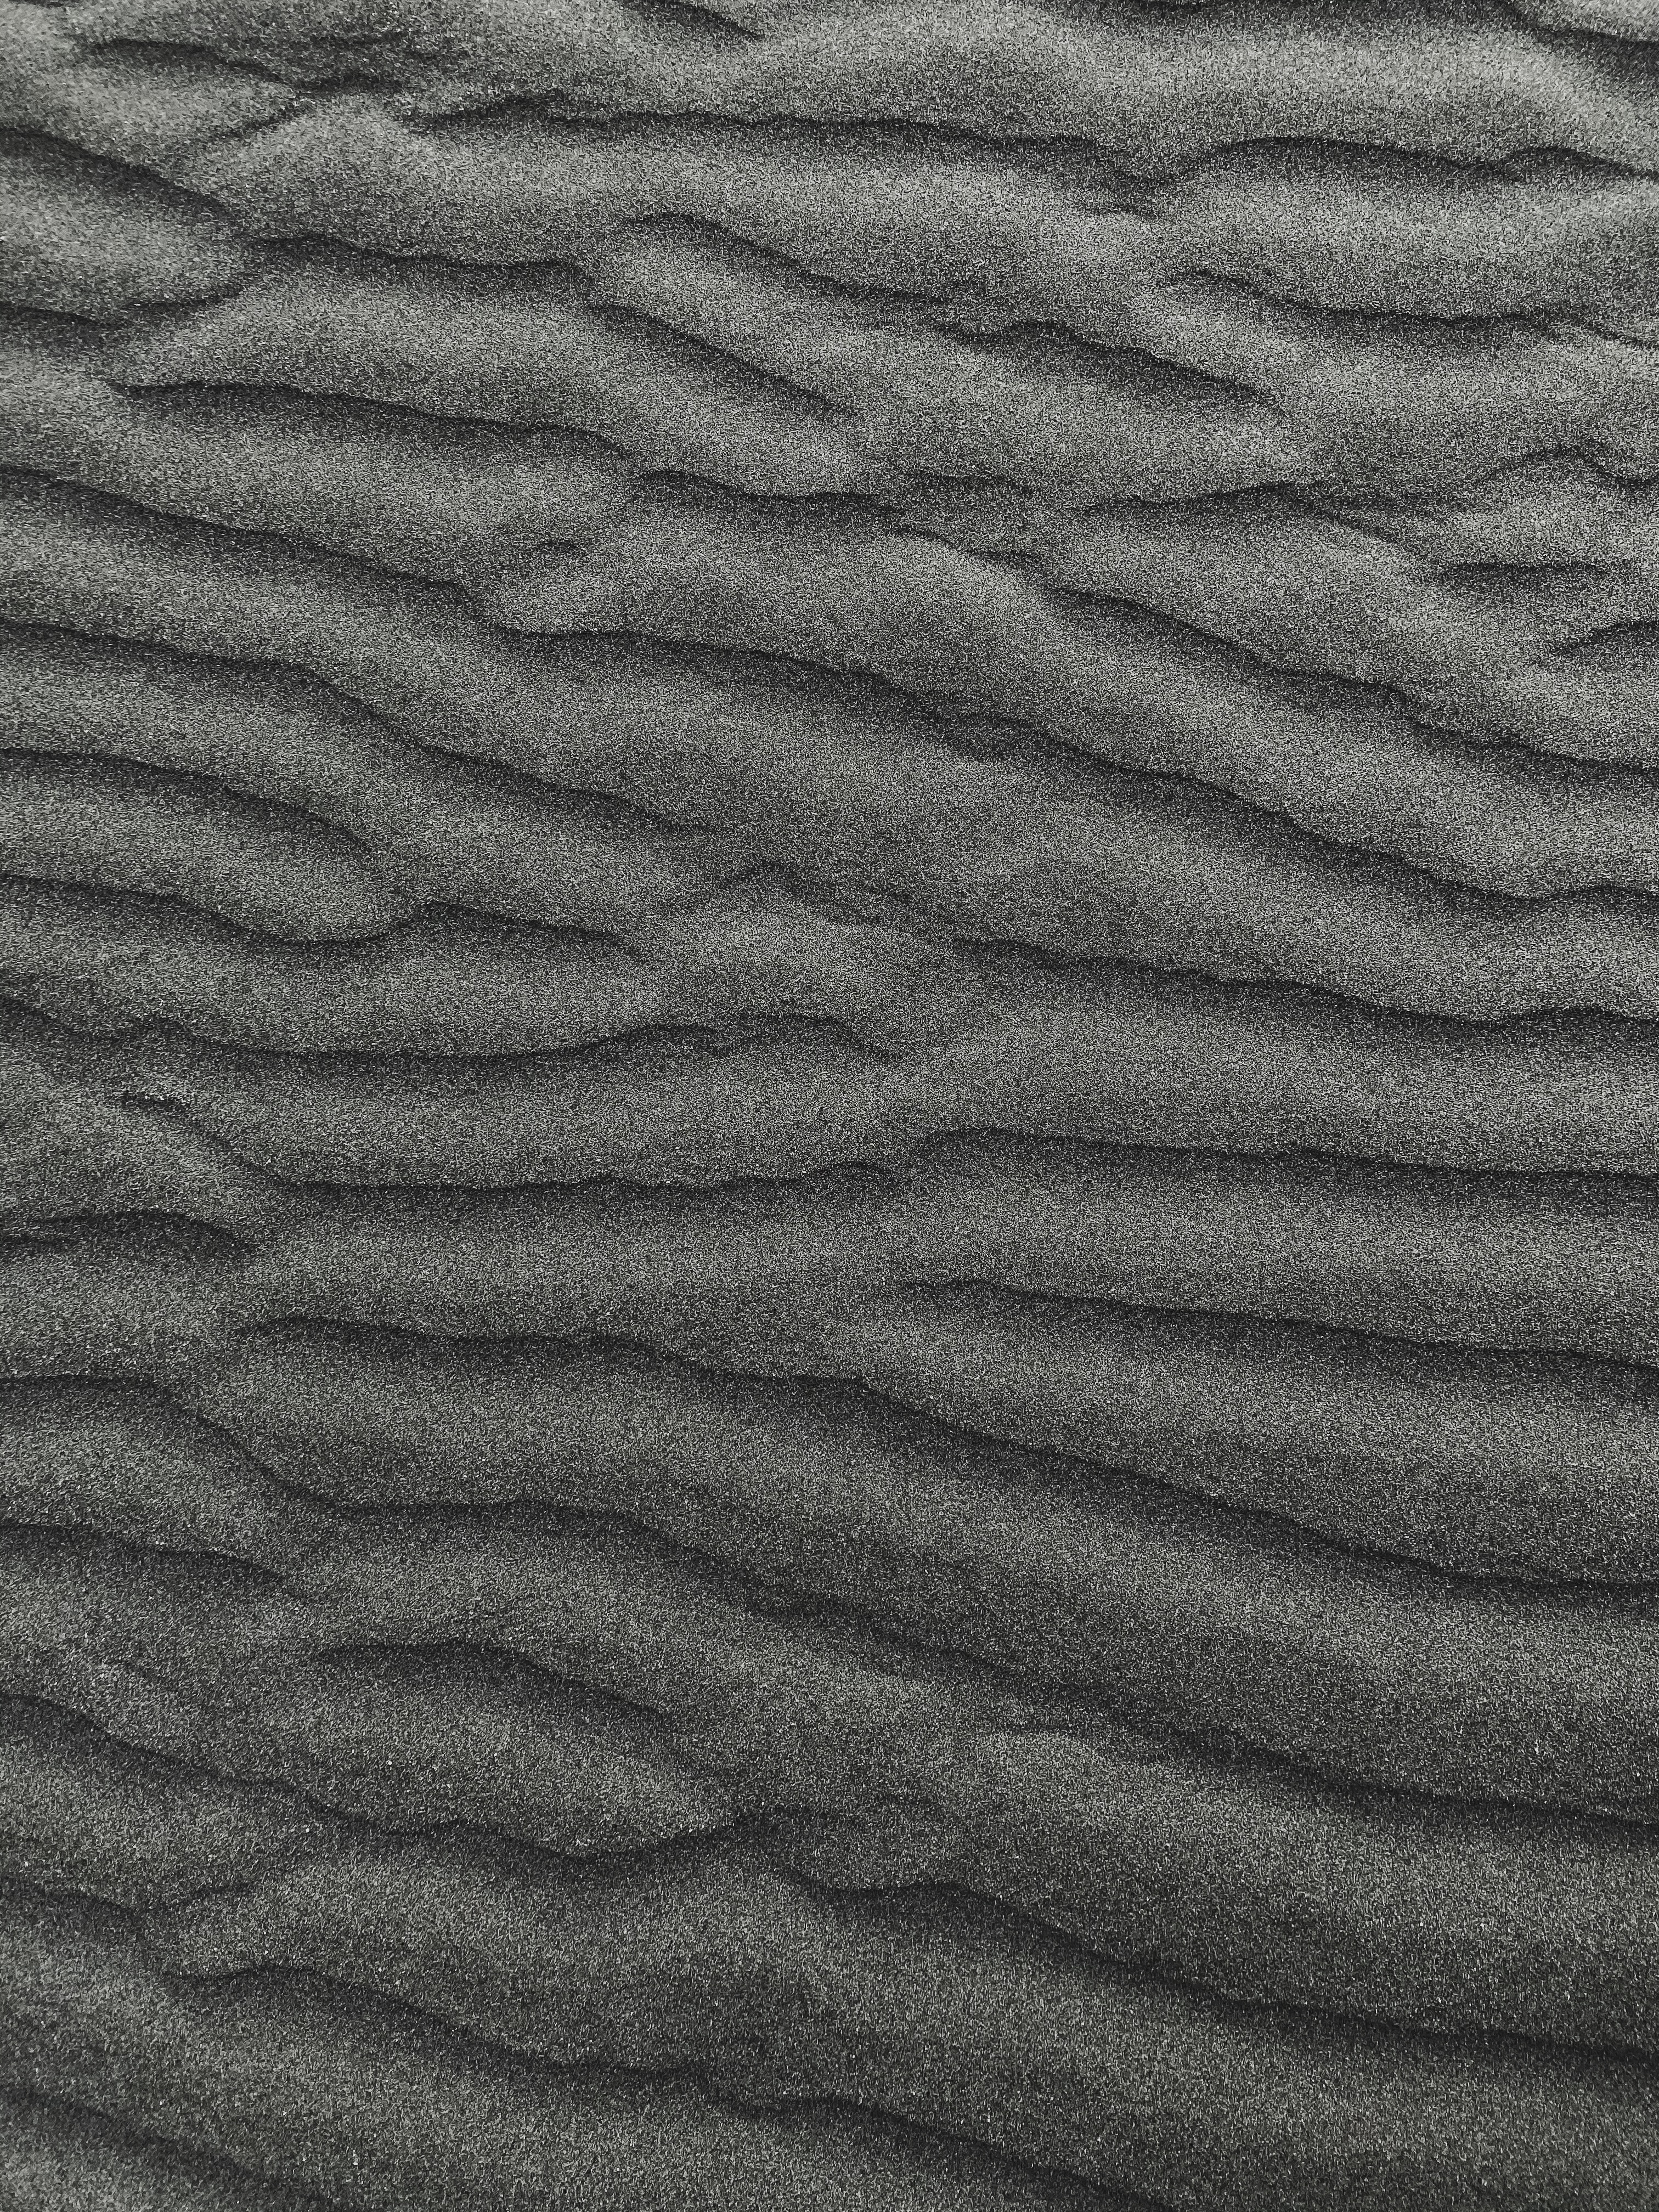 textures, wavy, sand, texture, grey